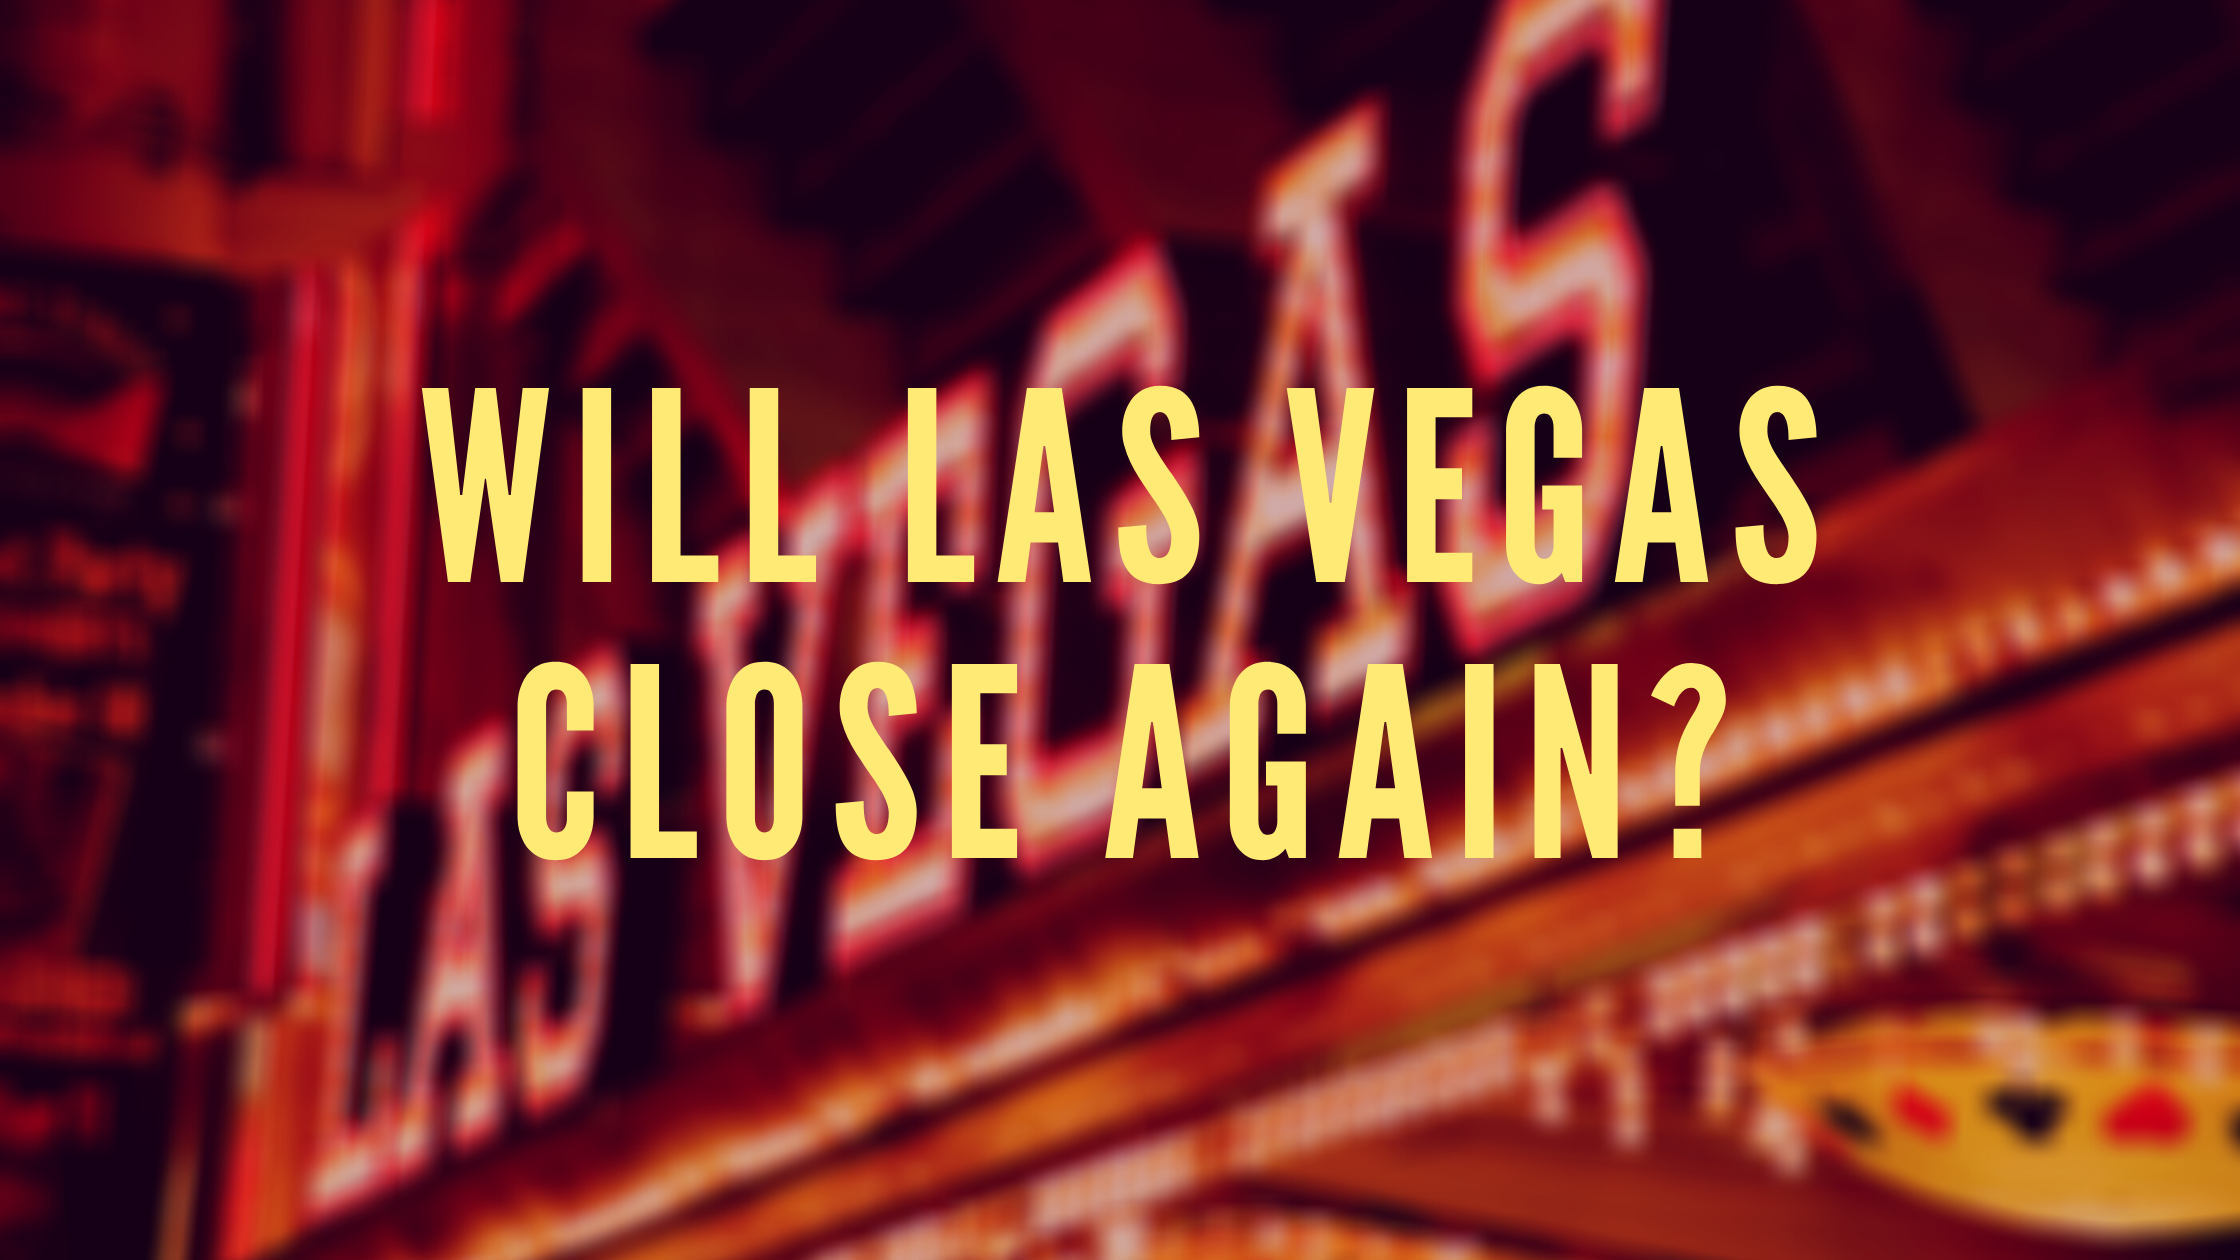 las vegas casinos closing again